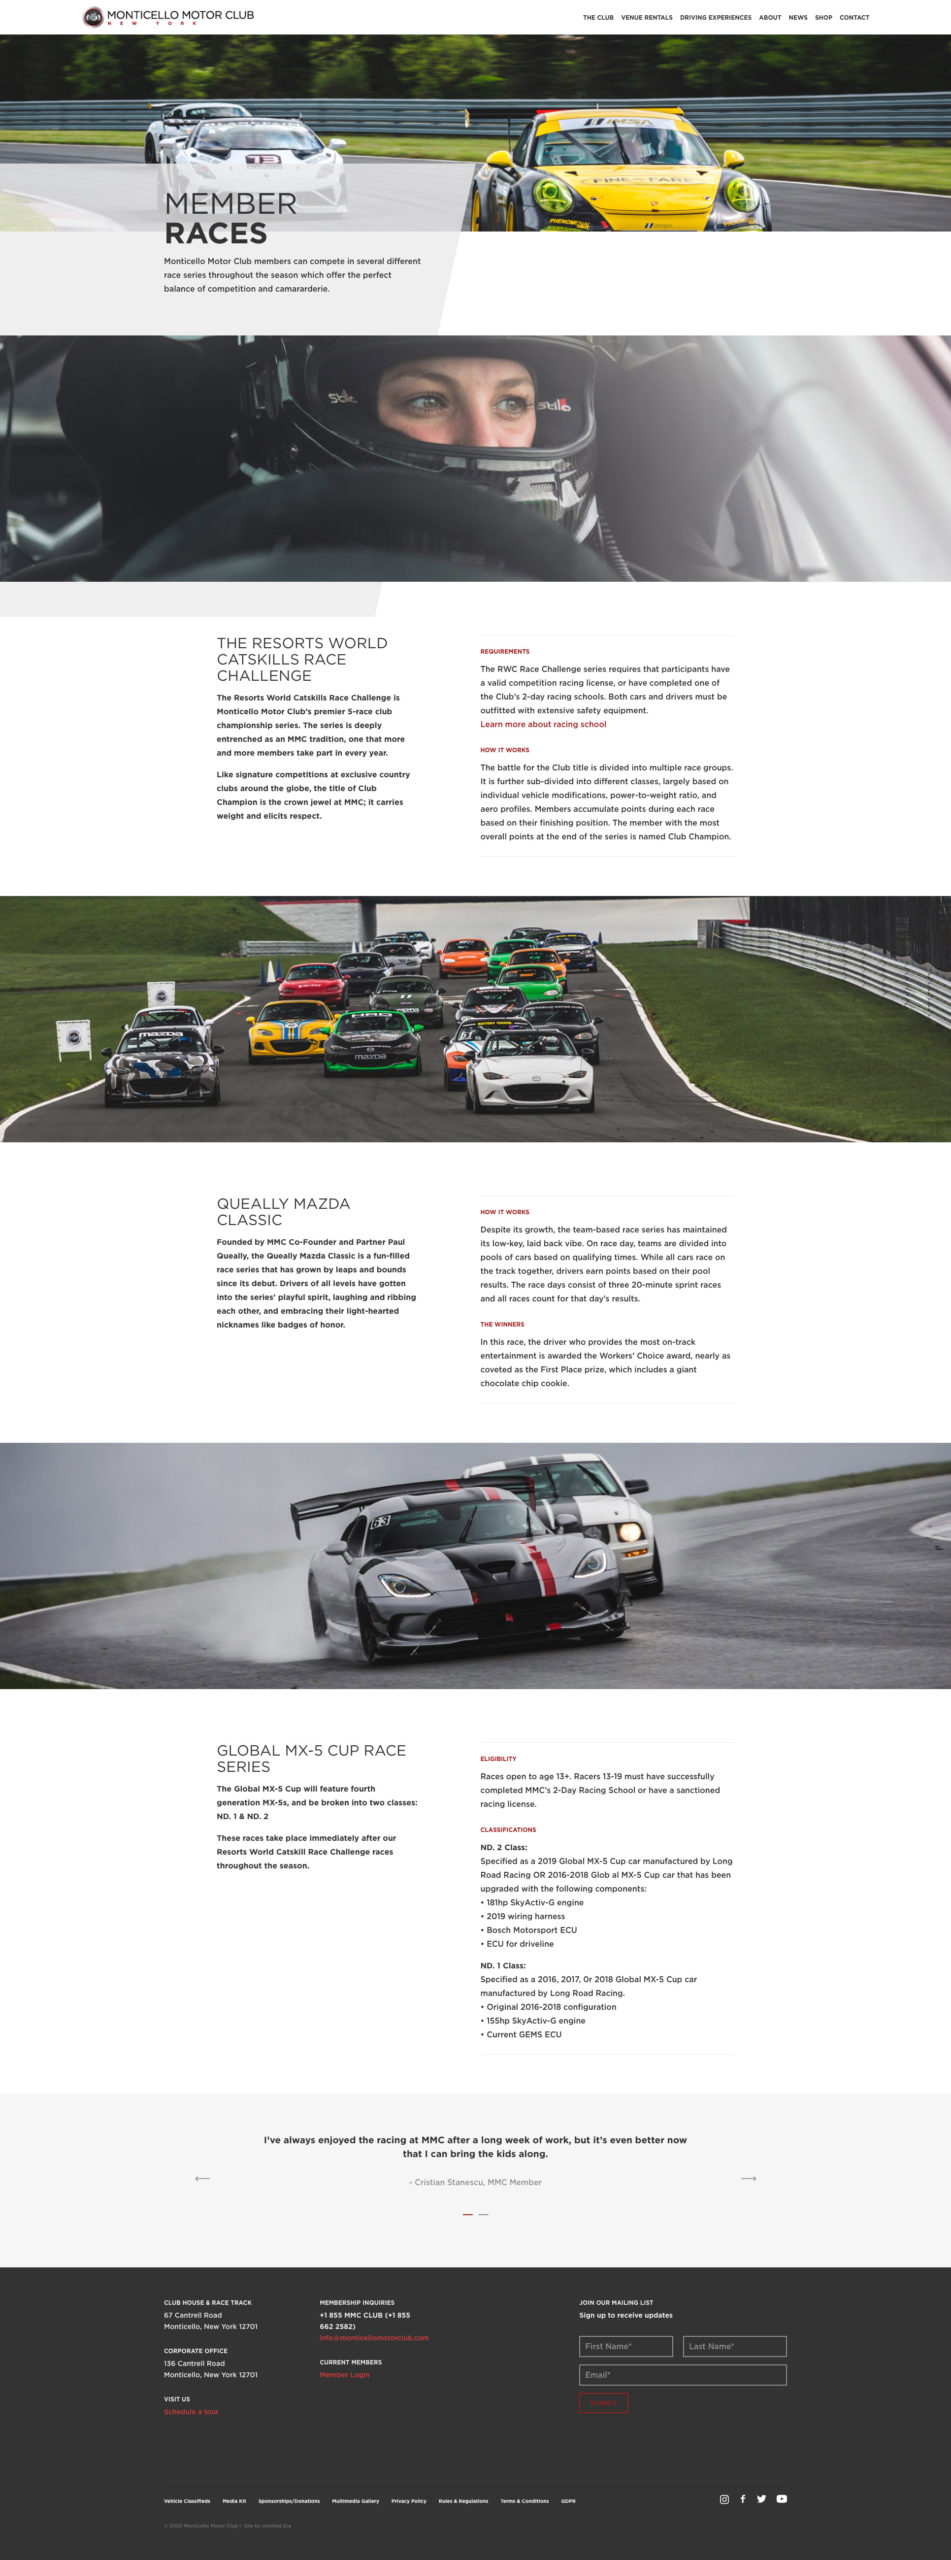 A screenshot of the MMC website Member Races page for desktop